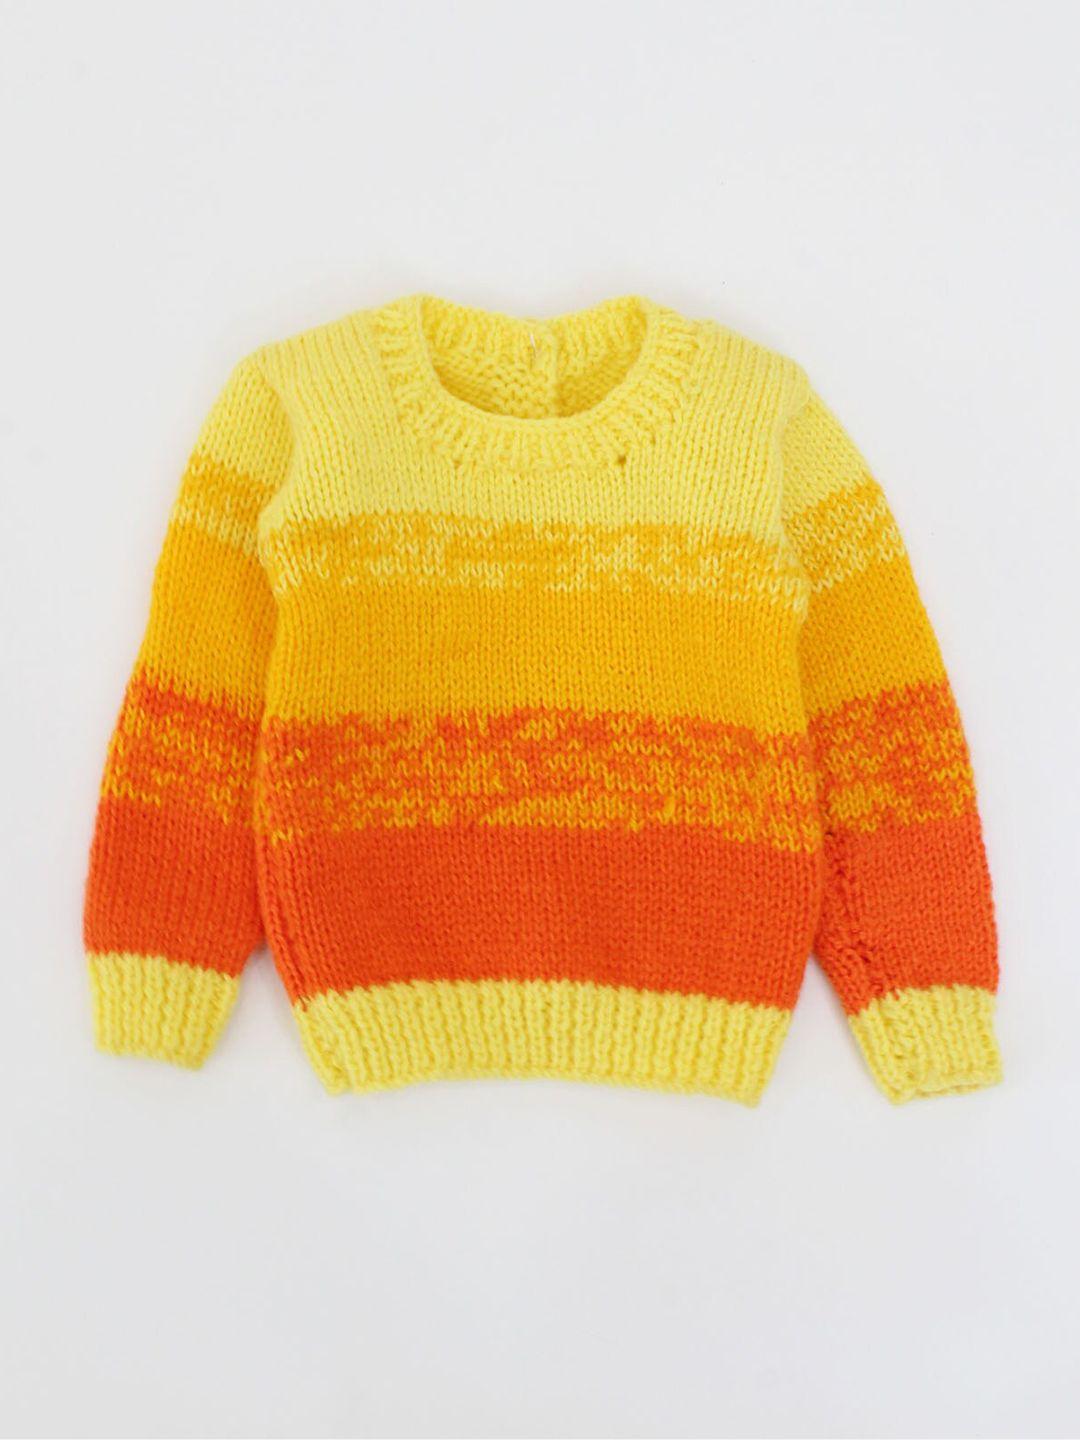 woonie unisex kids orange sweaters